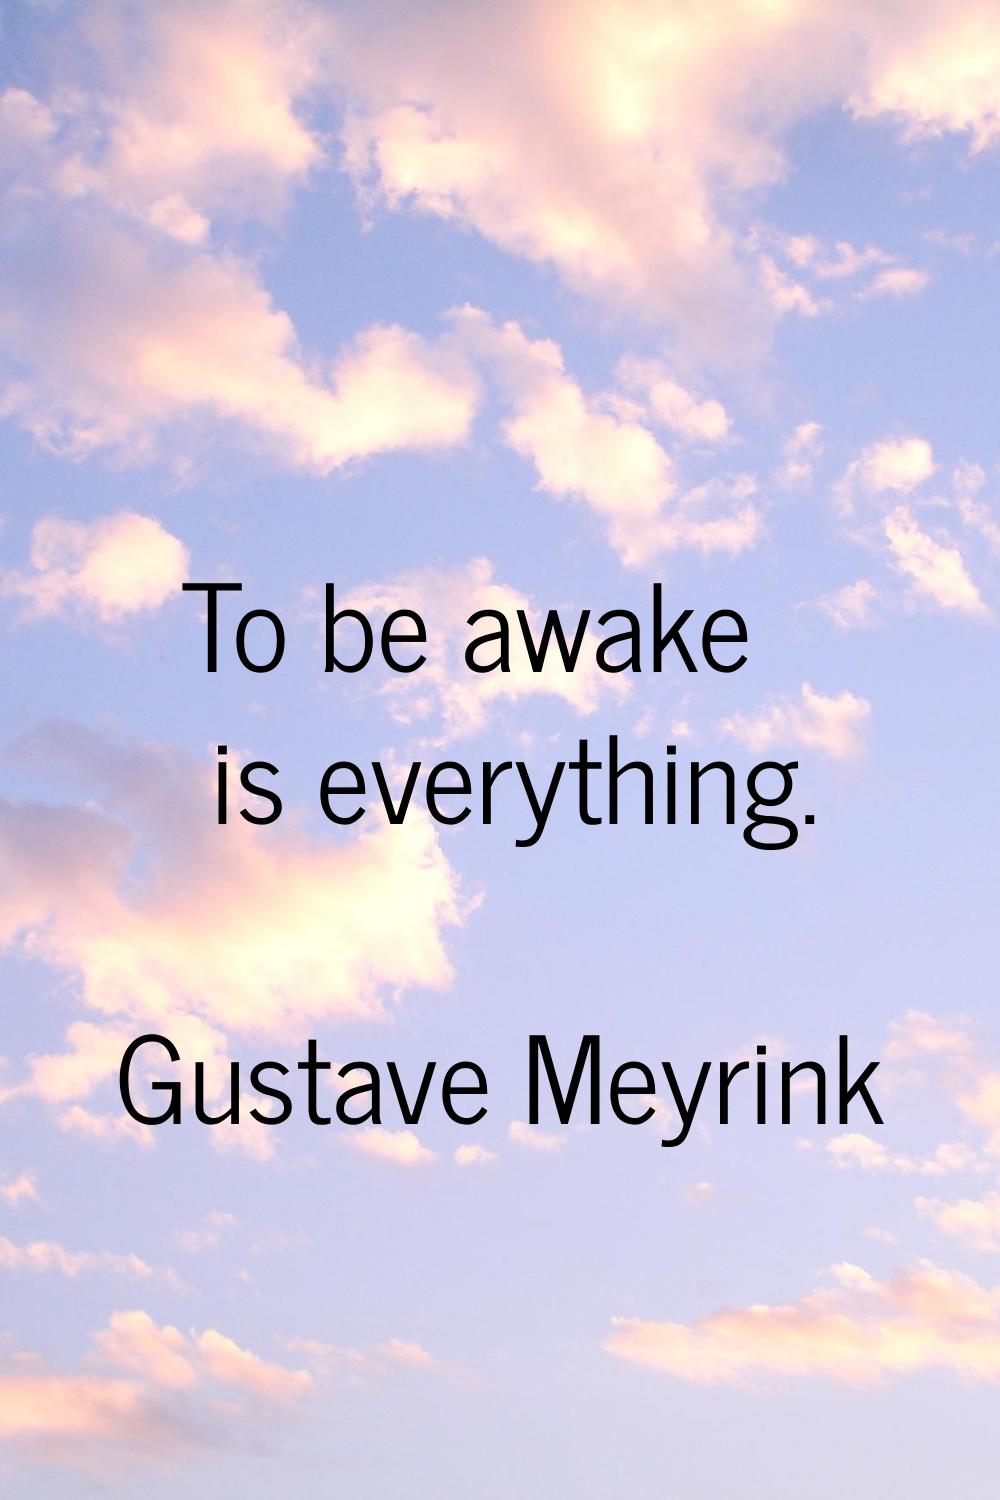 To be awake is everything.